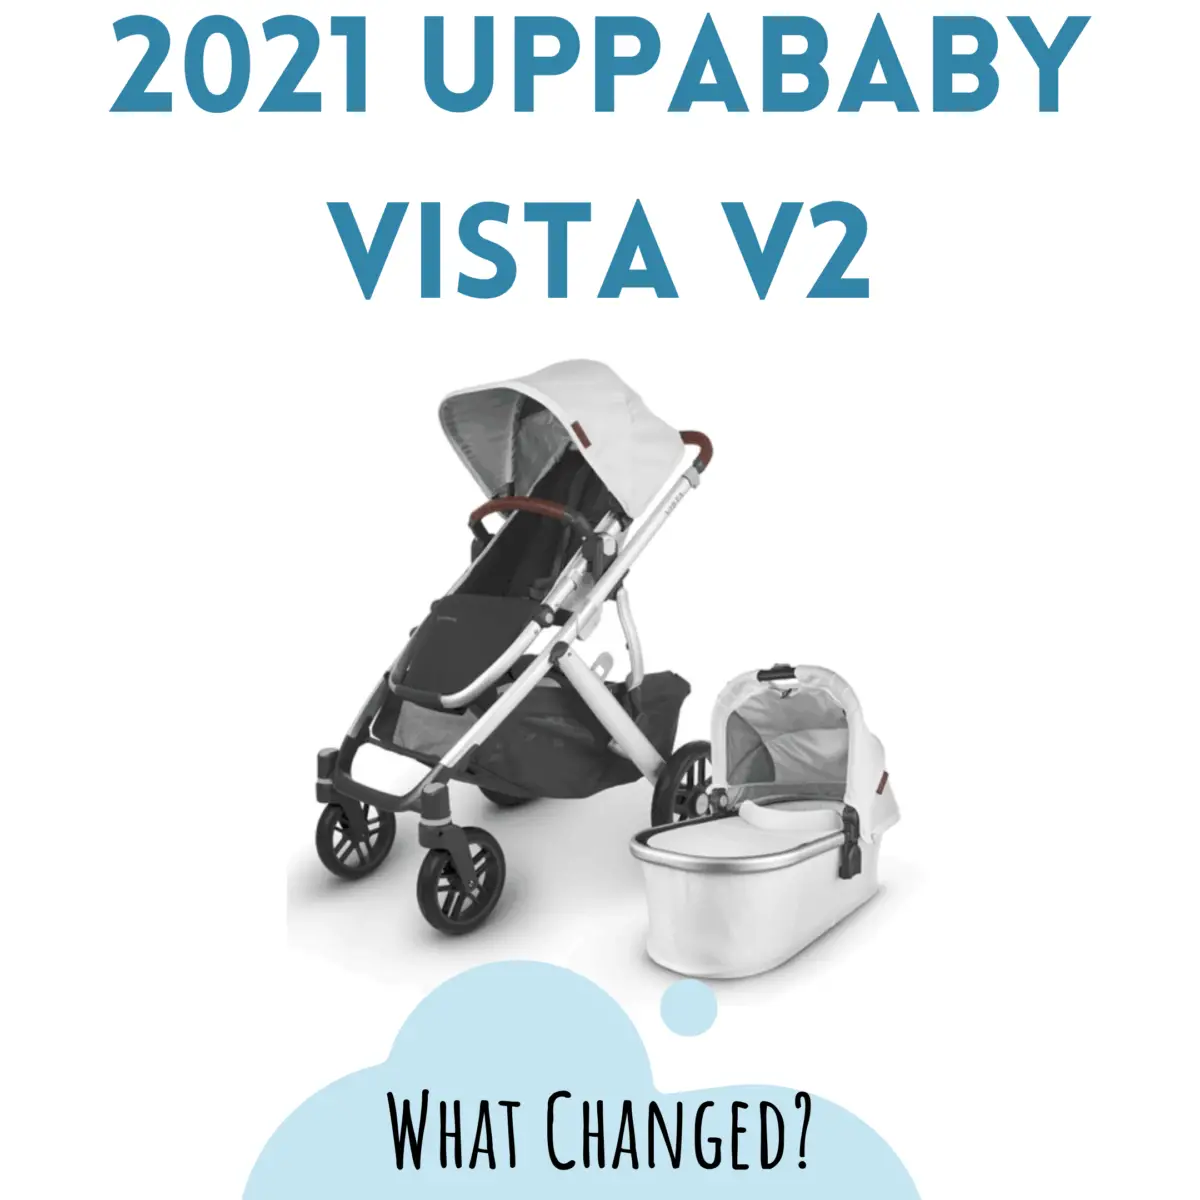 2021 UPPAbaby Vista V2 | What Changed?